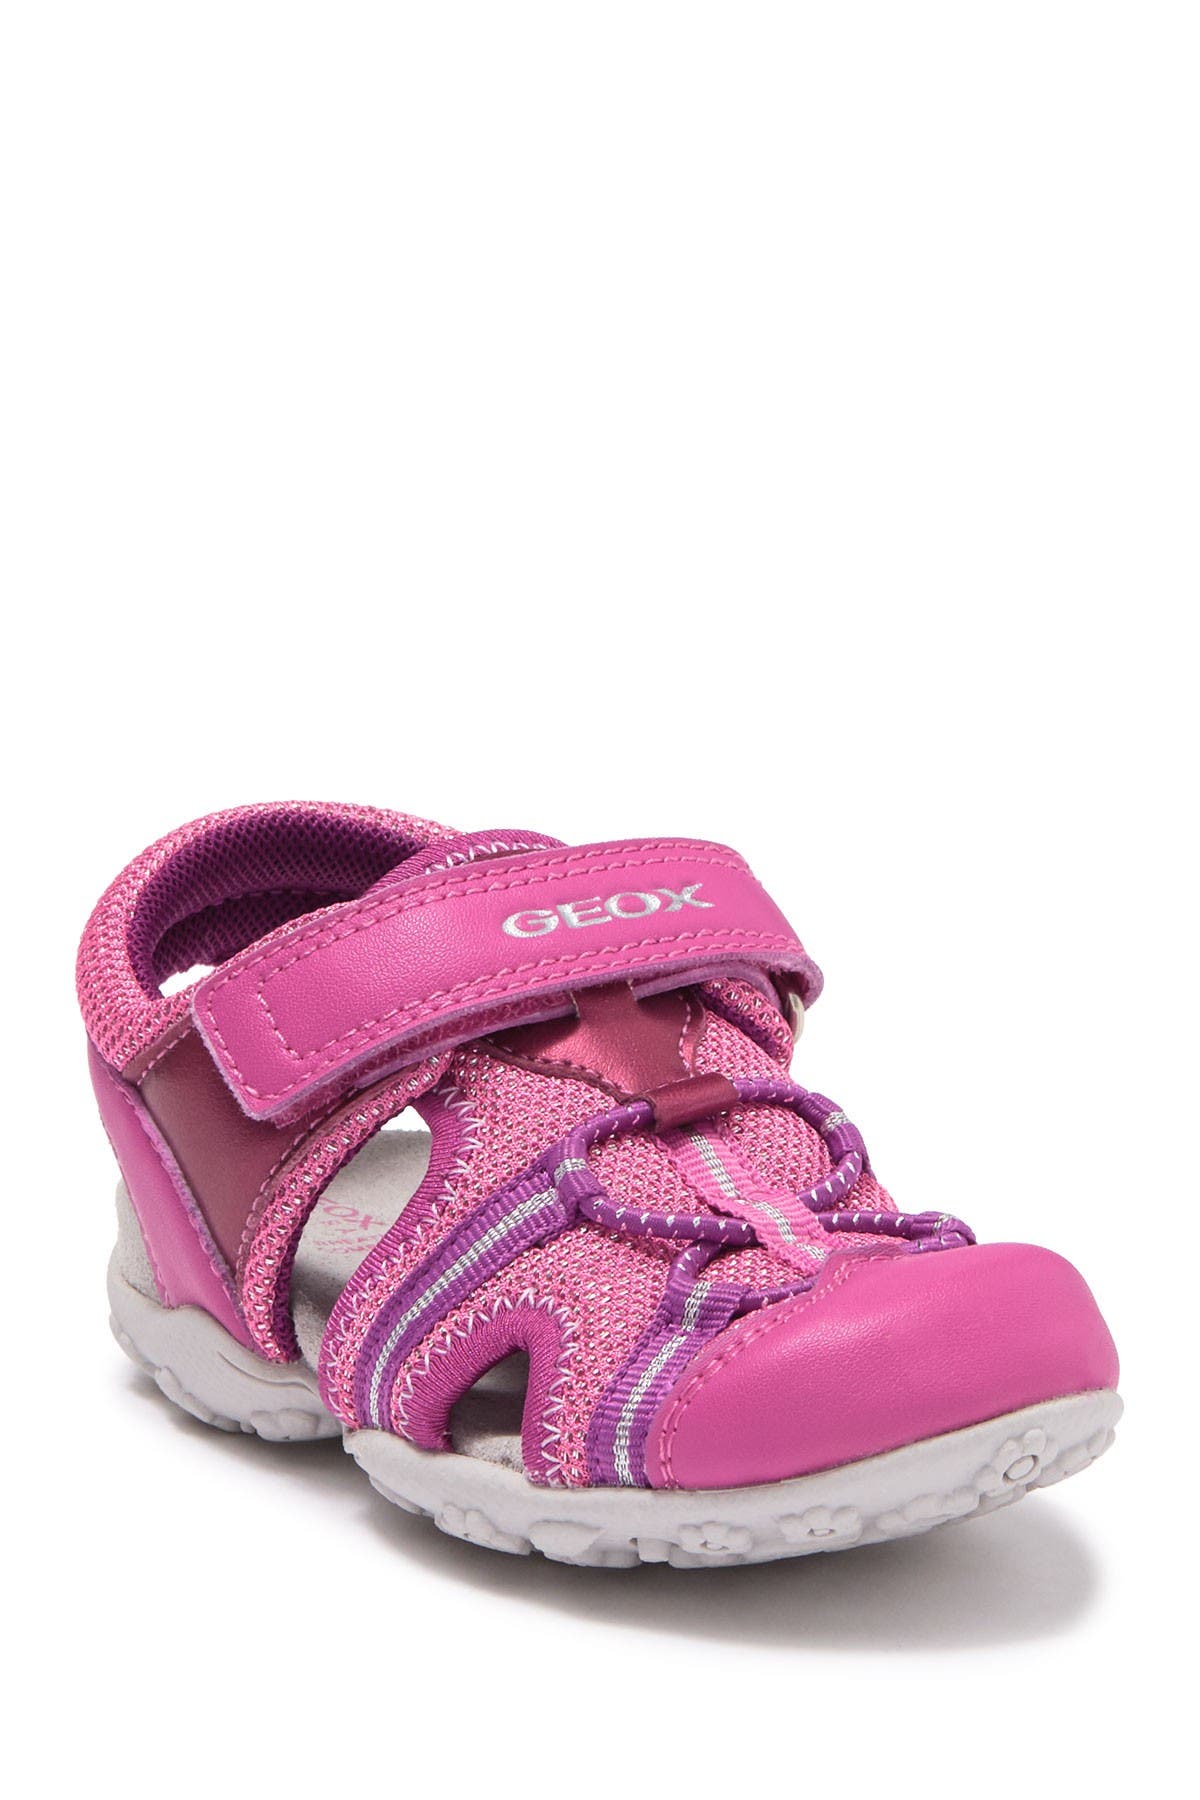 geox roxanne sandal